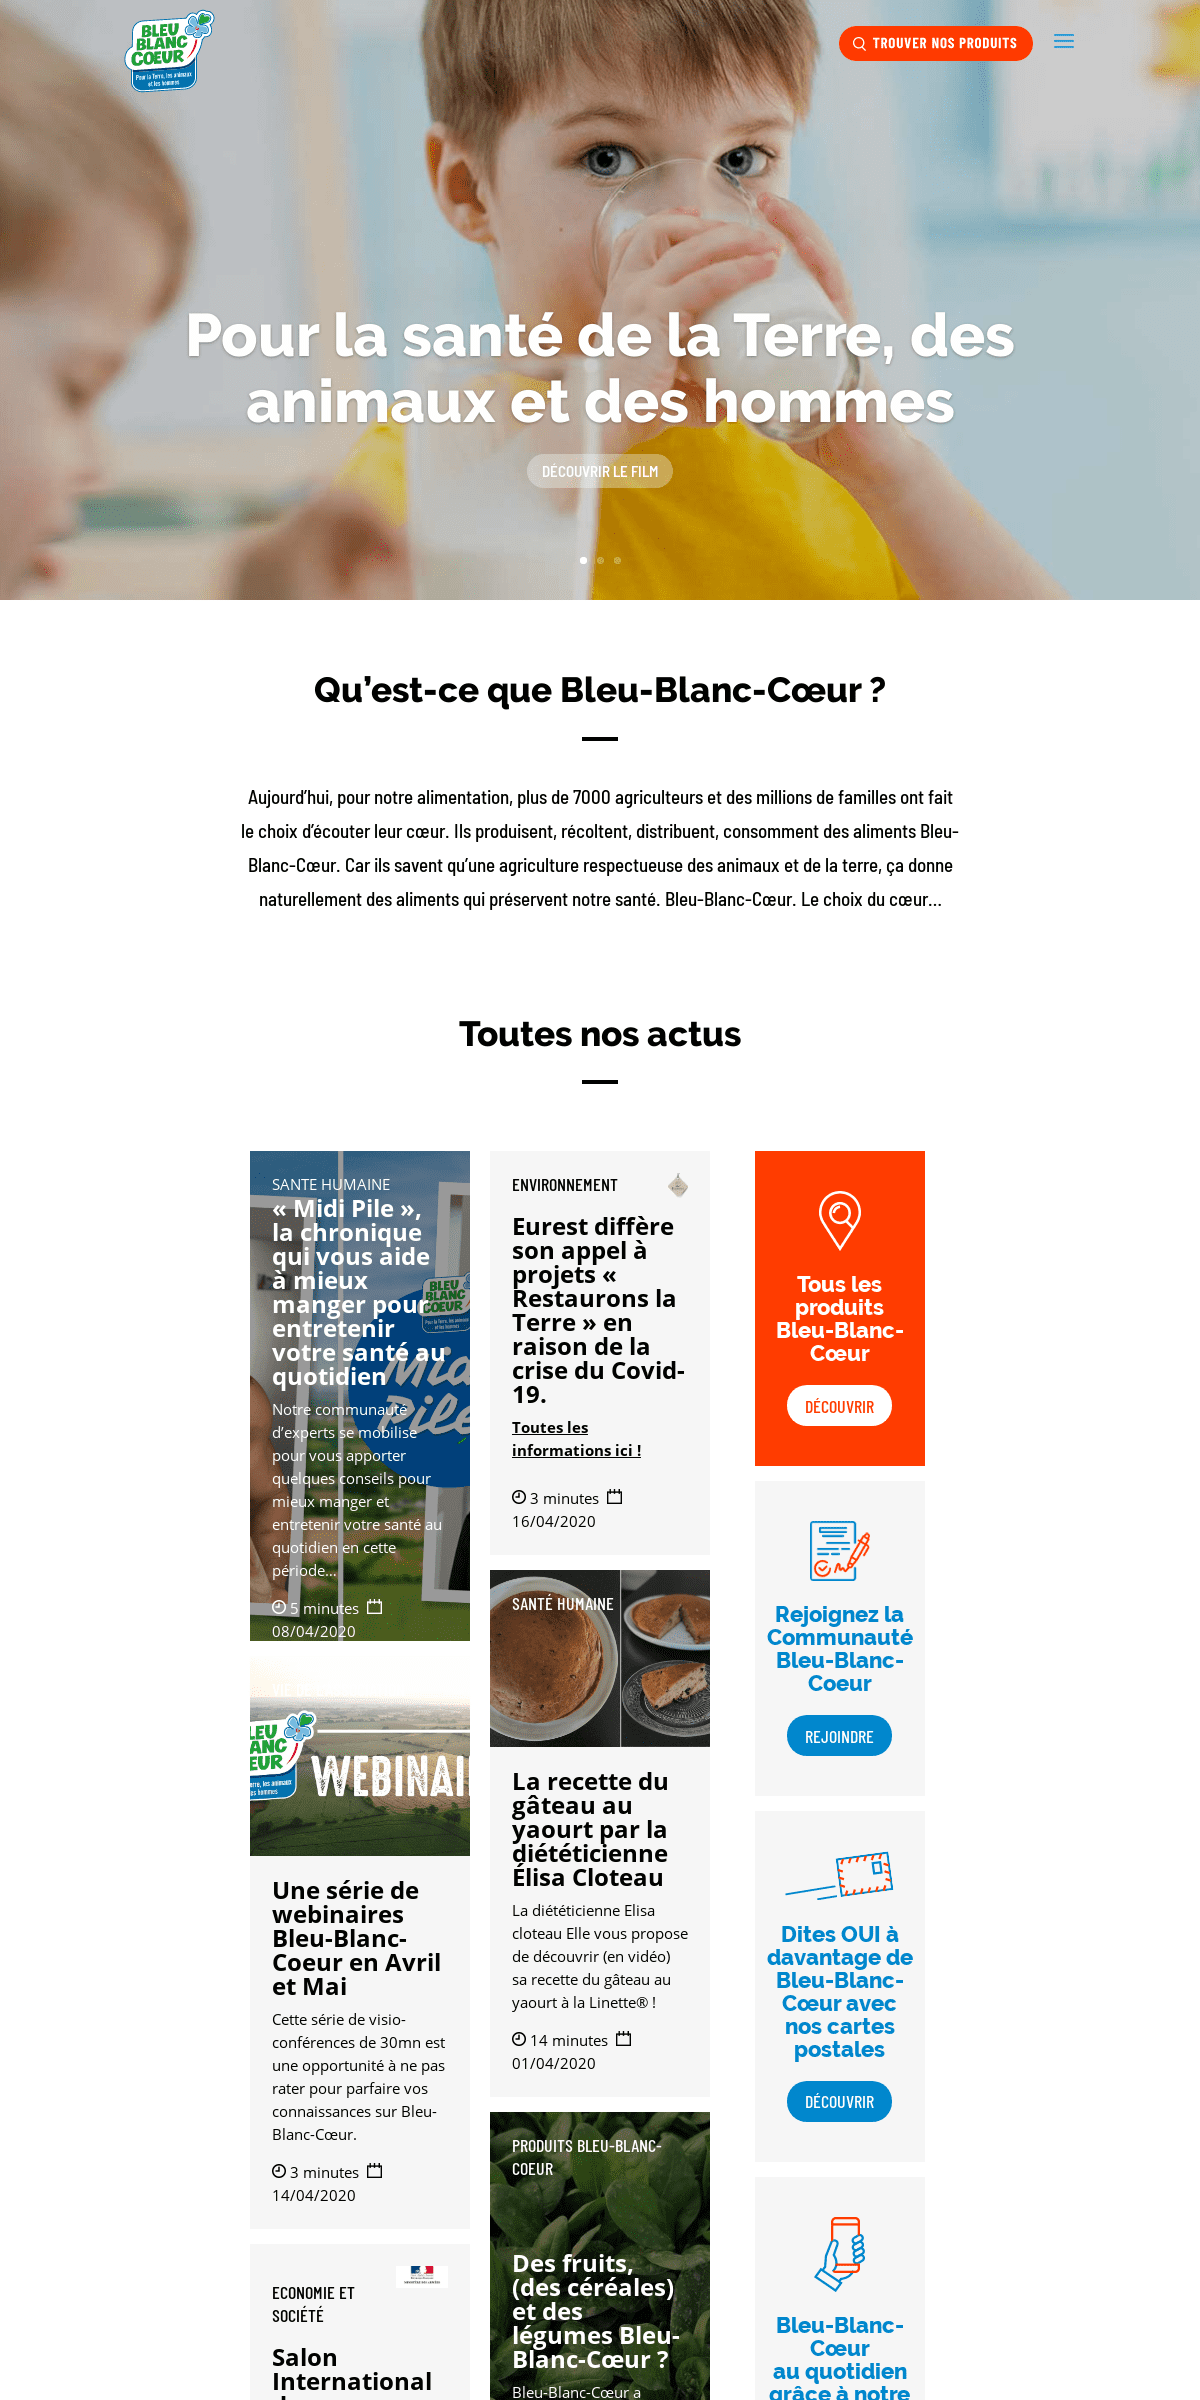 A complete backup of bleu-blanc-coeur.org